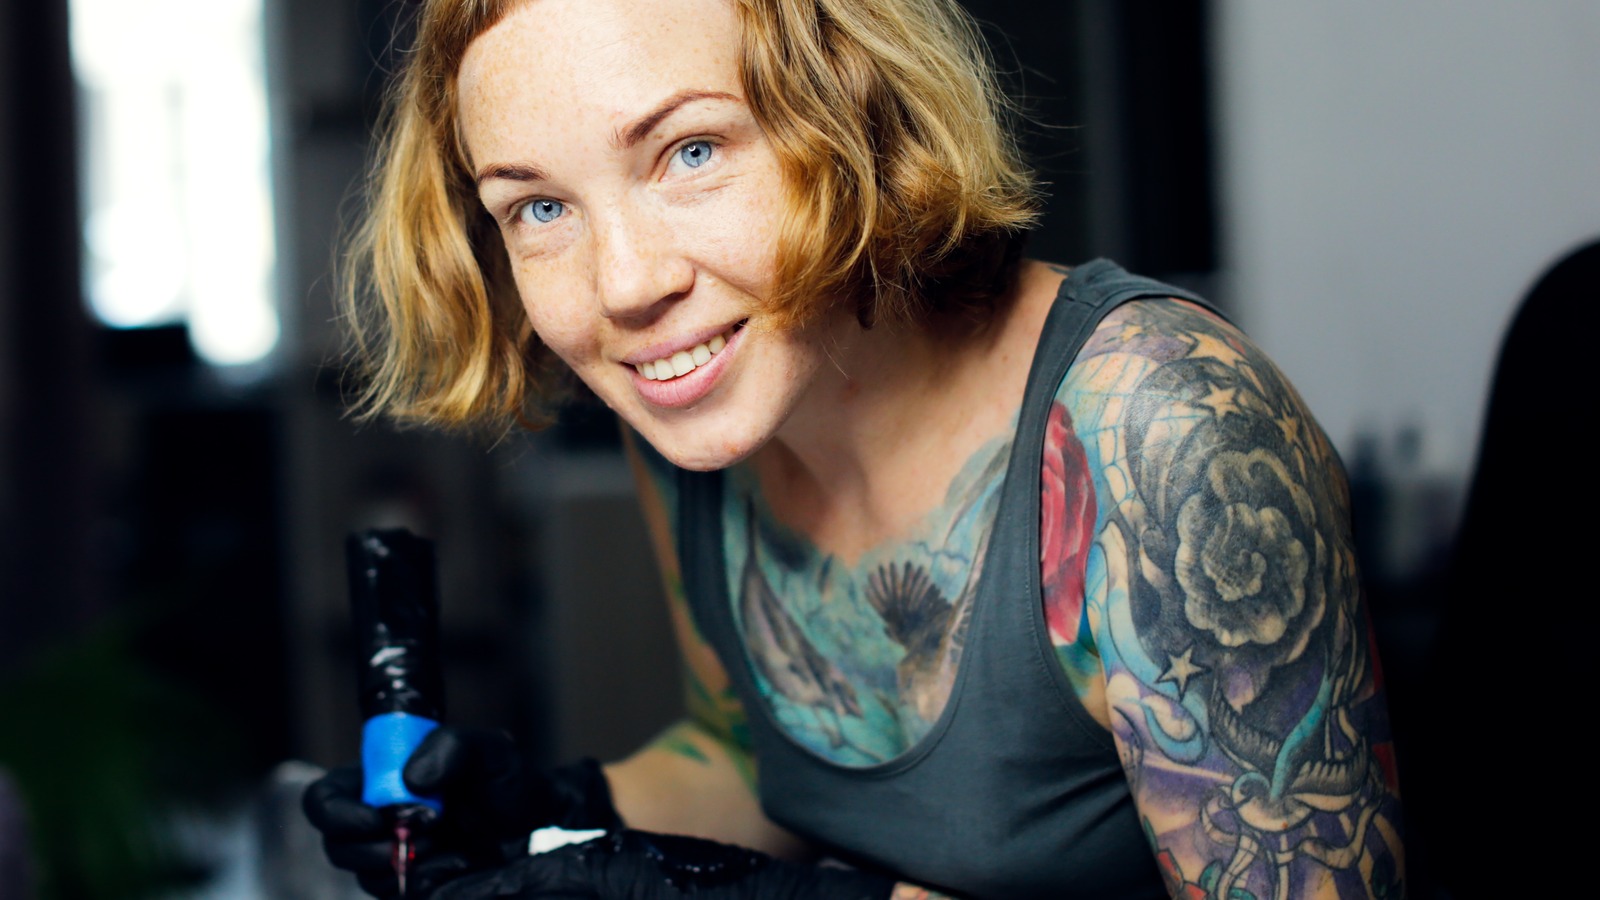 Detroit Journal: The Telltale Tattoo – Anita's Way